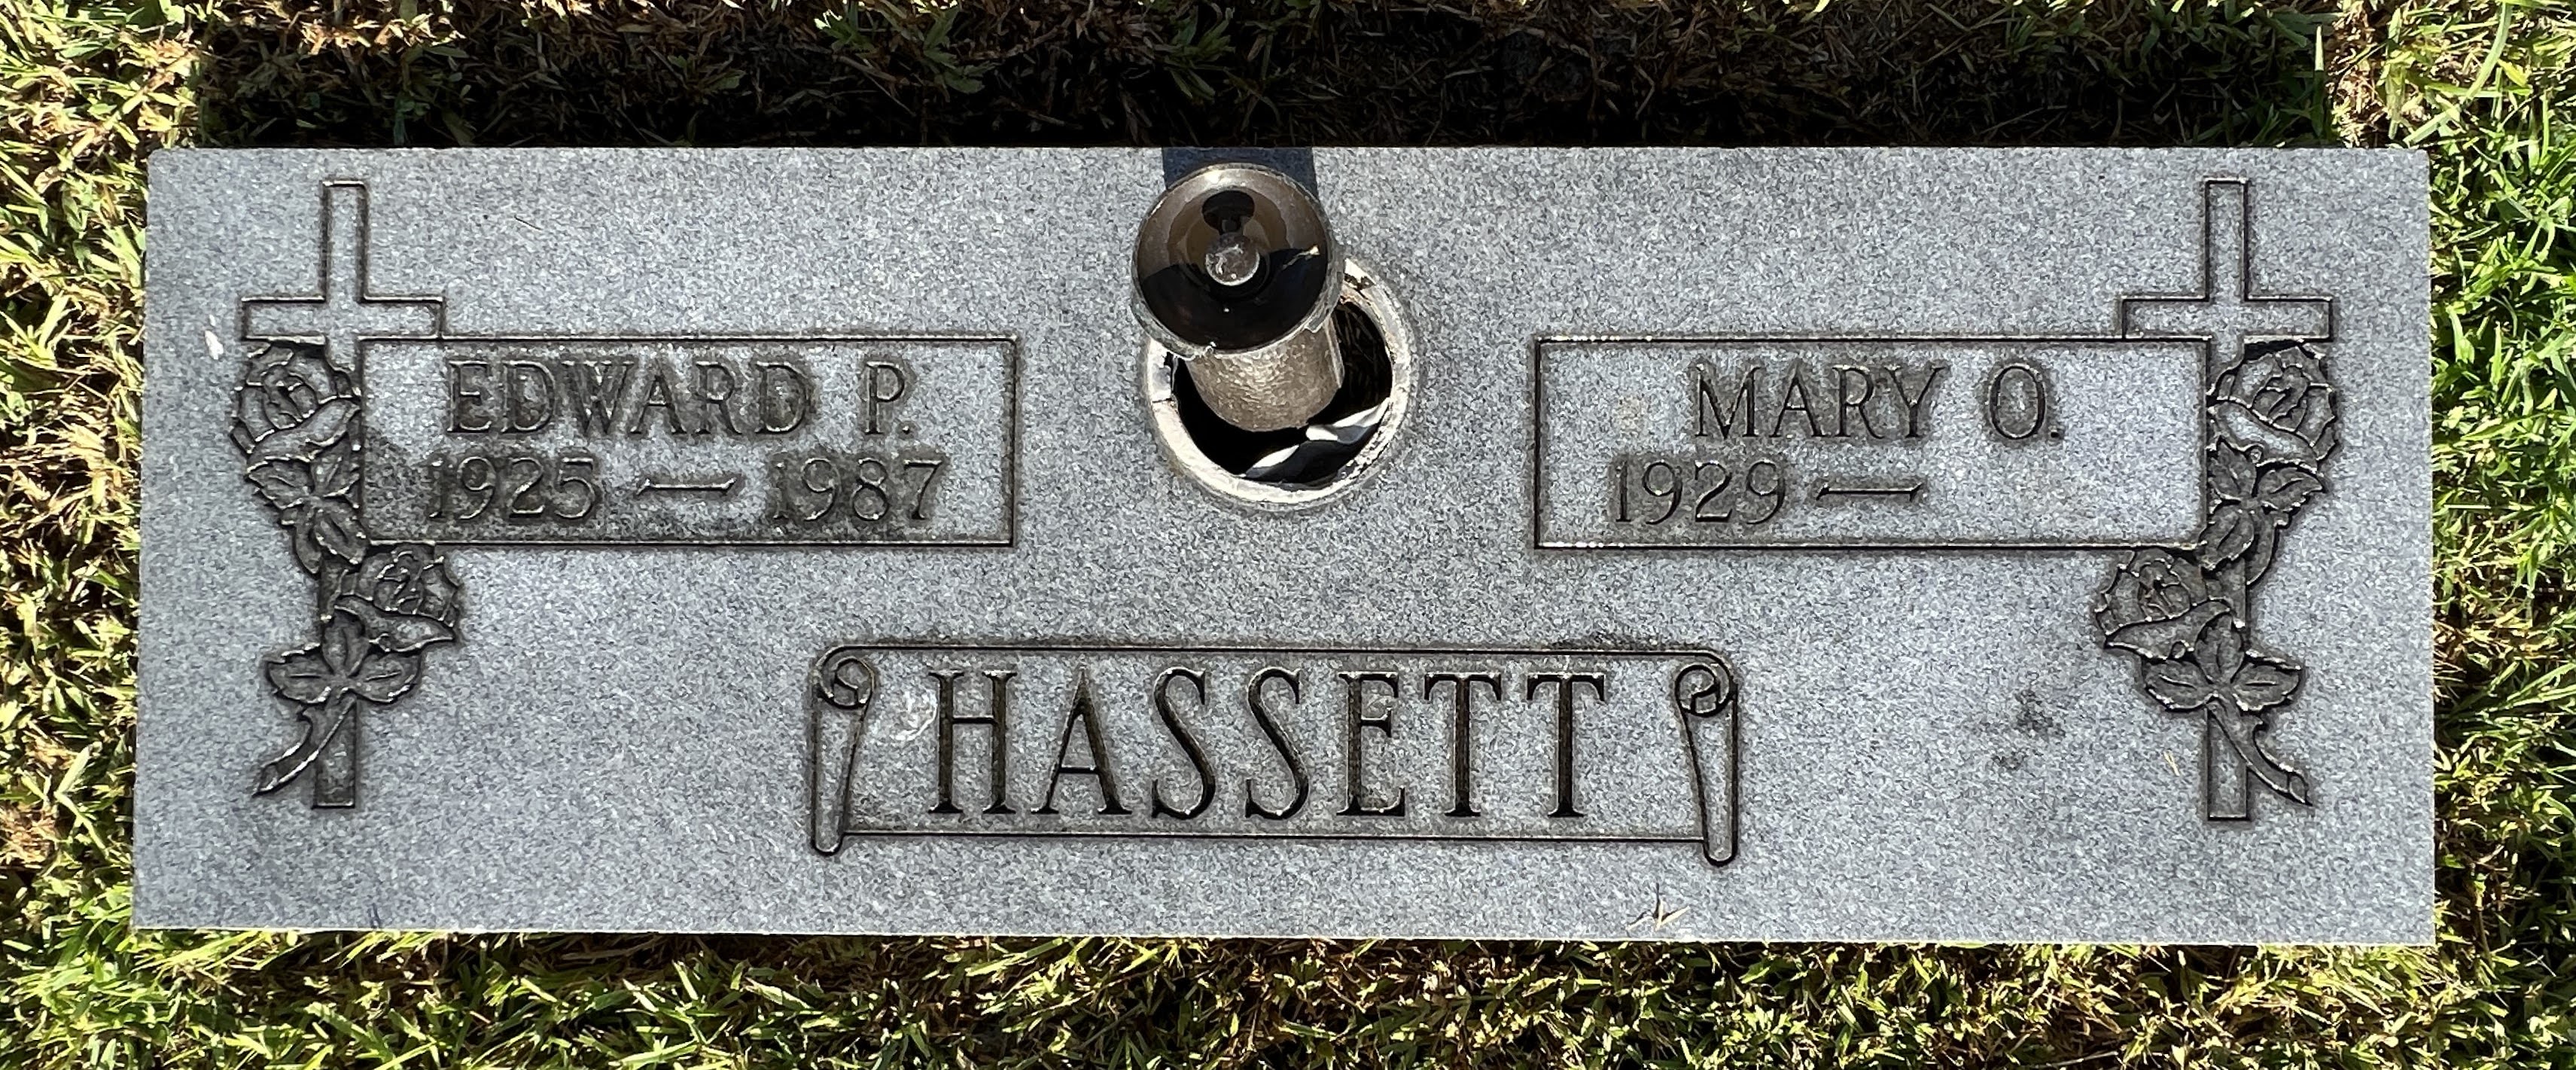 Edward P Hassett